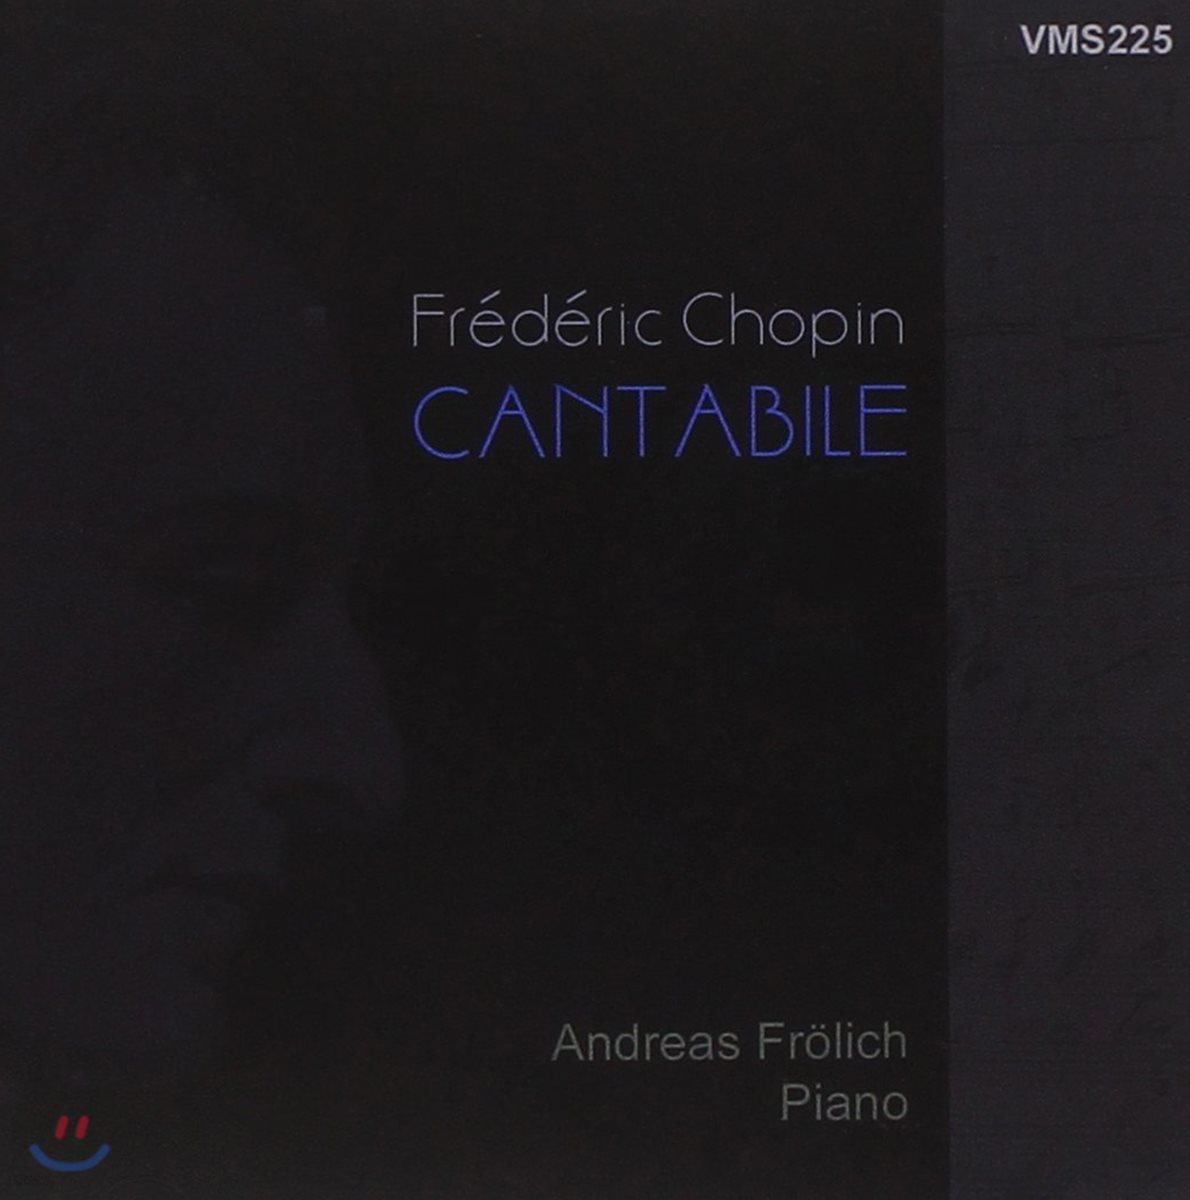 Andreas Frolich 쇼팽: 칸타빌레 (Chopin: Cantabile)